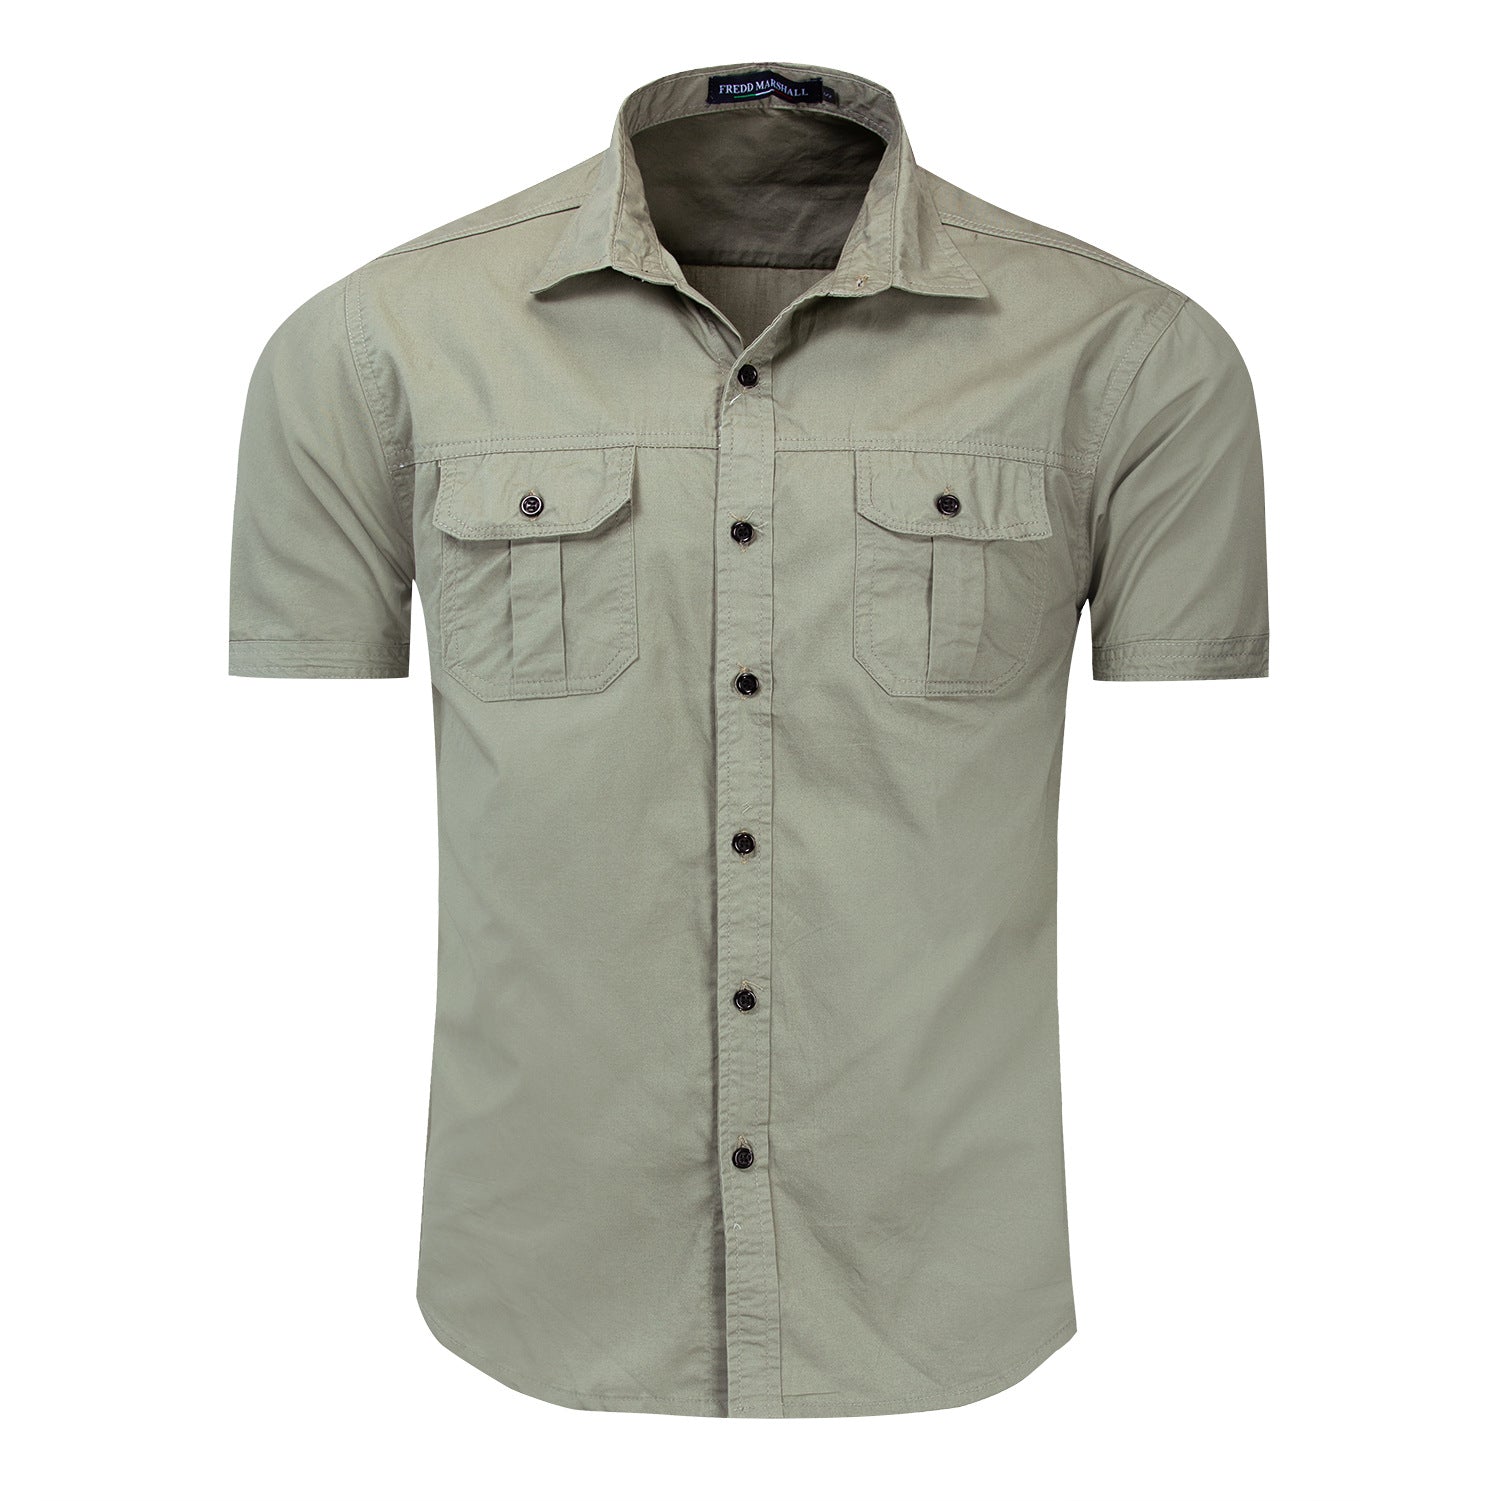 Men's Outdoor Military 100% Cotton Shirt